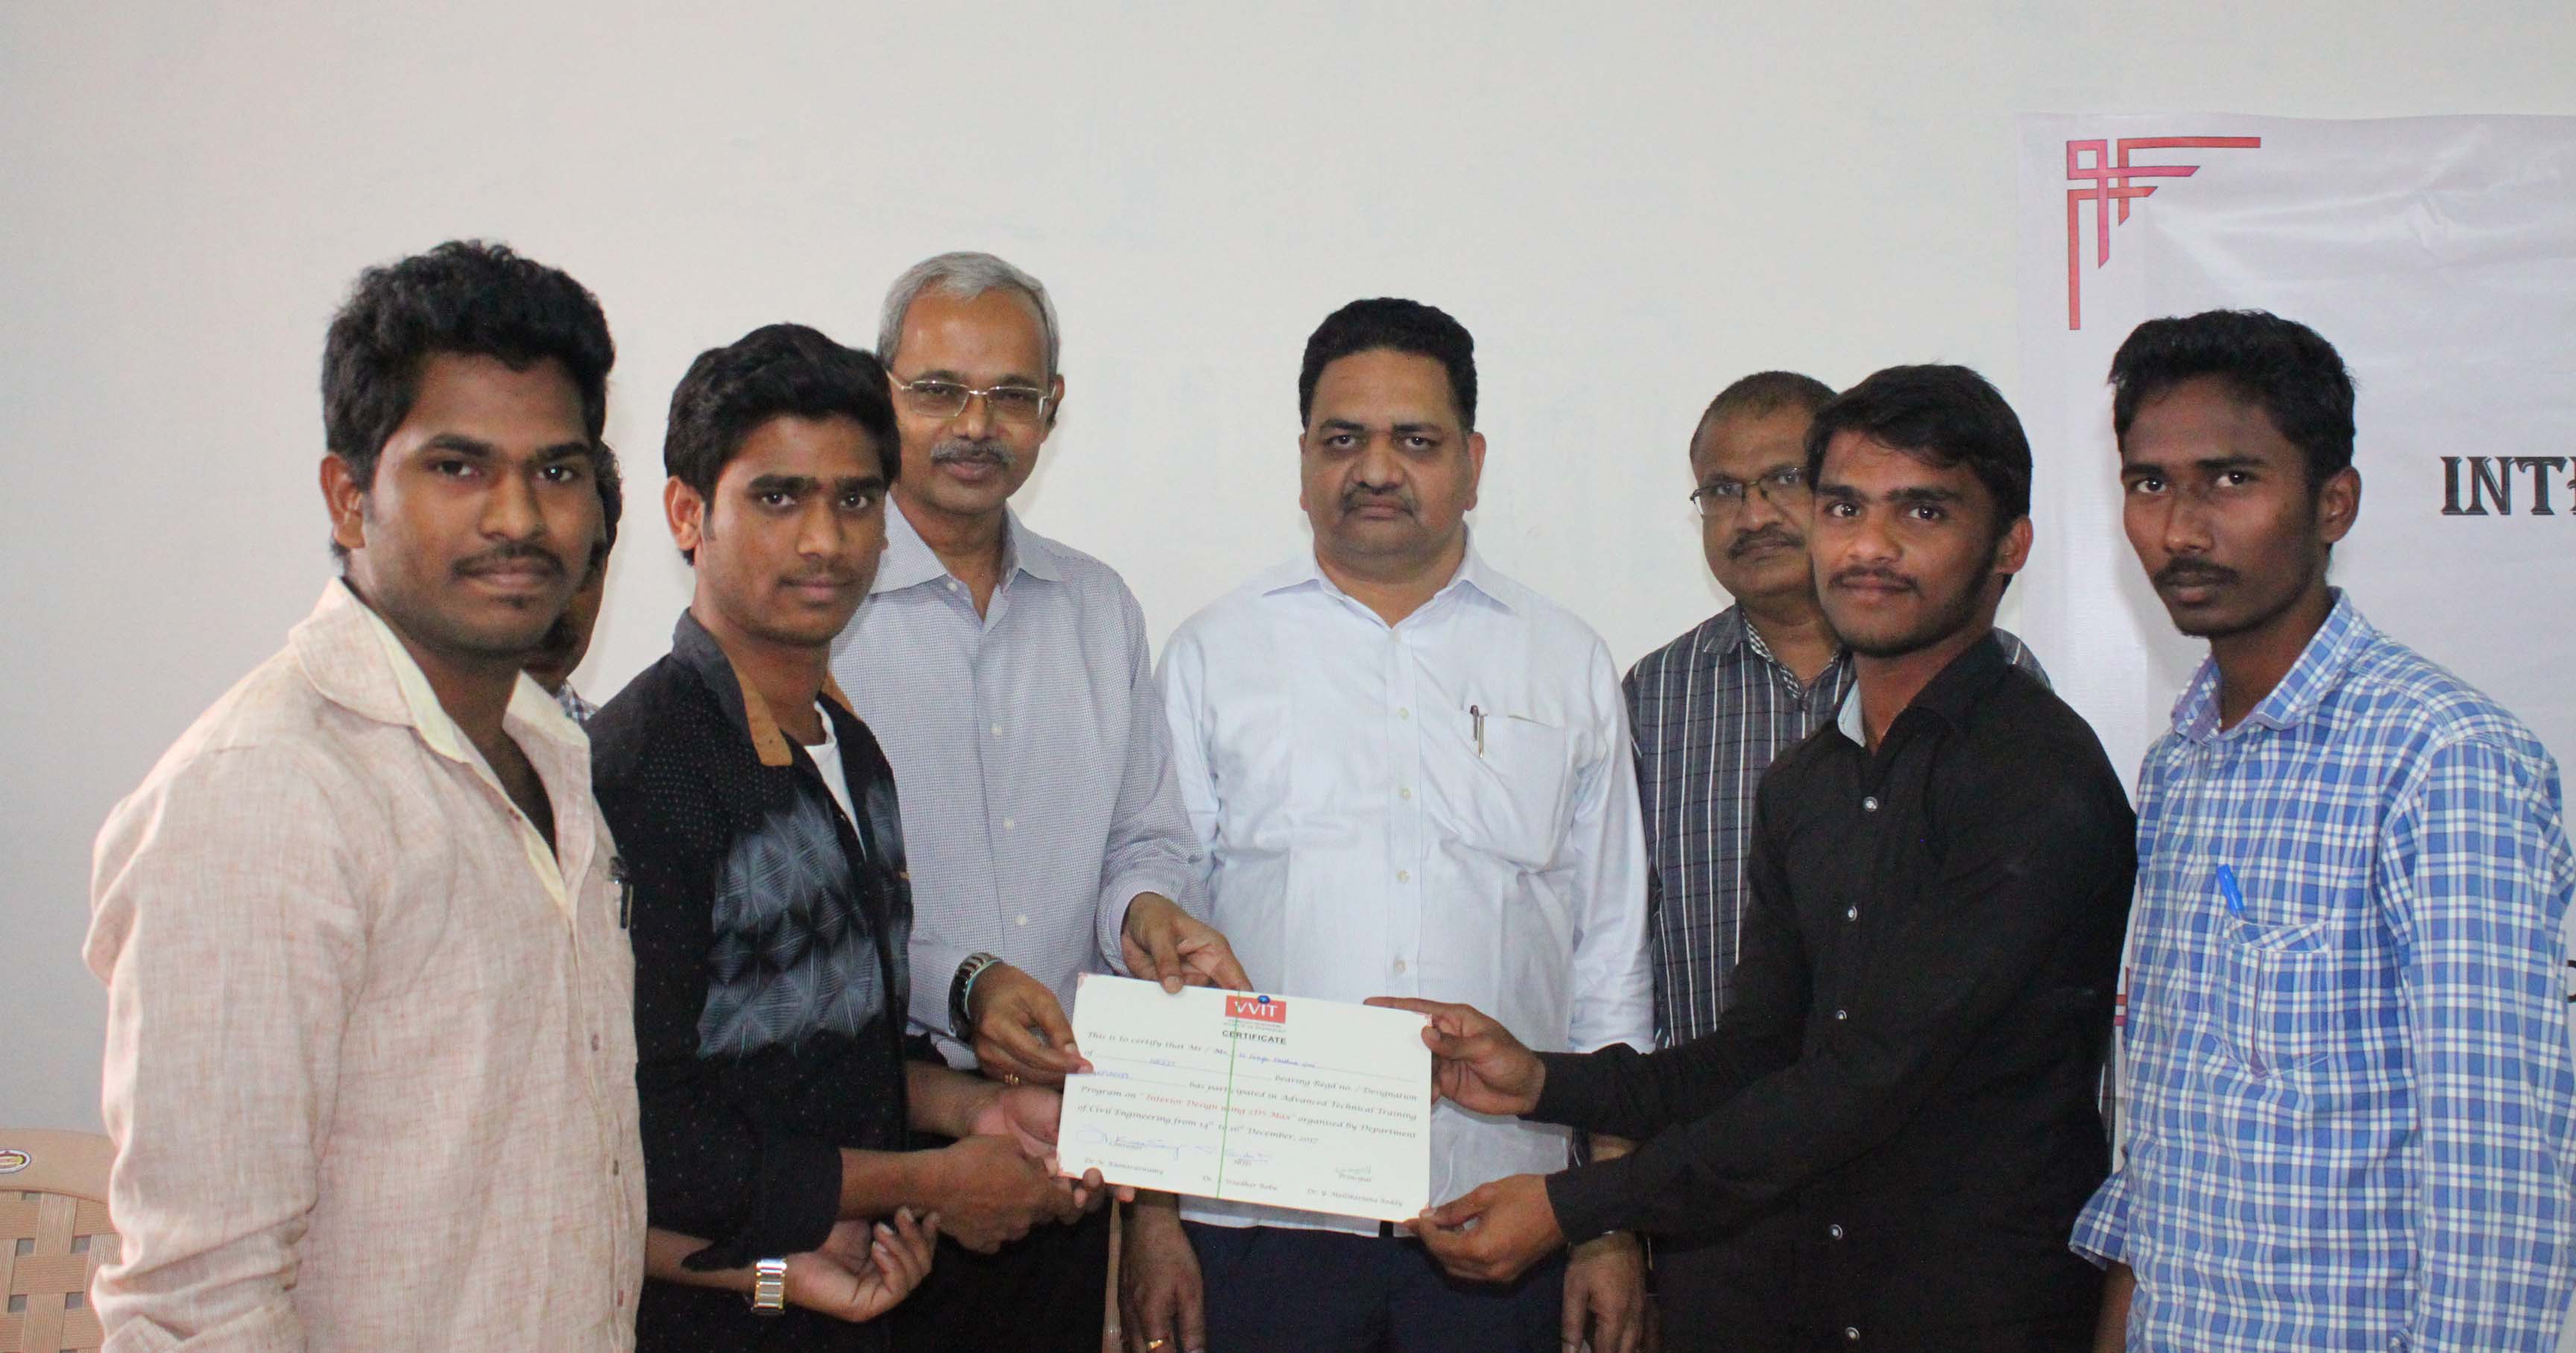 vasireddy vidyasagar giving away certificates to participants